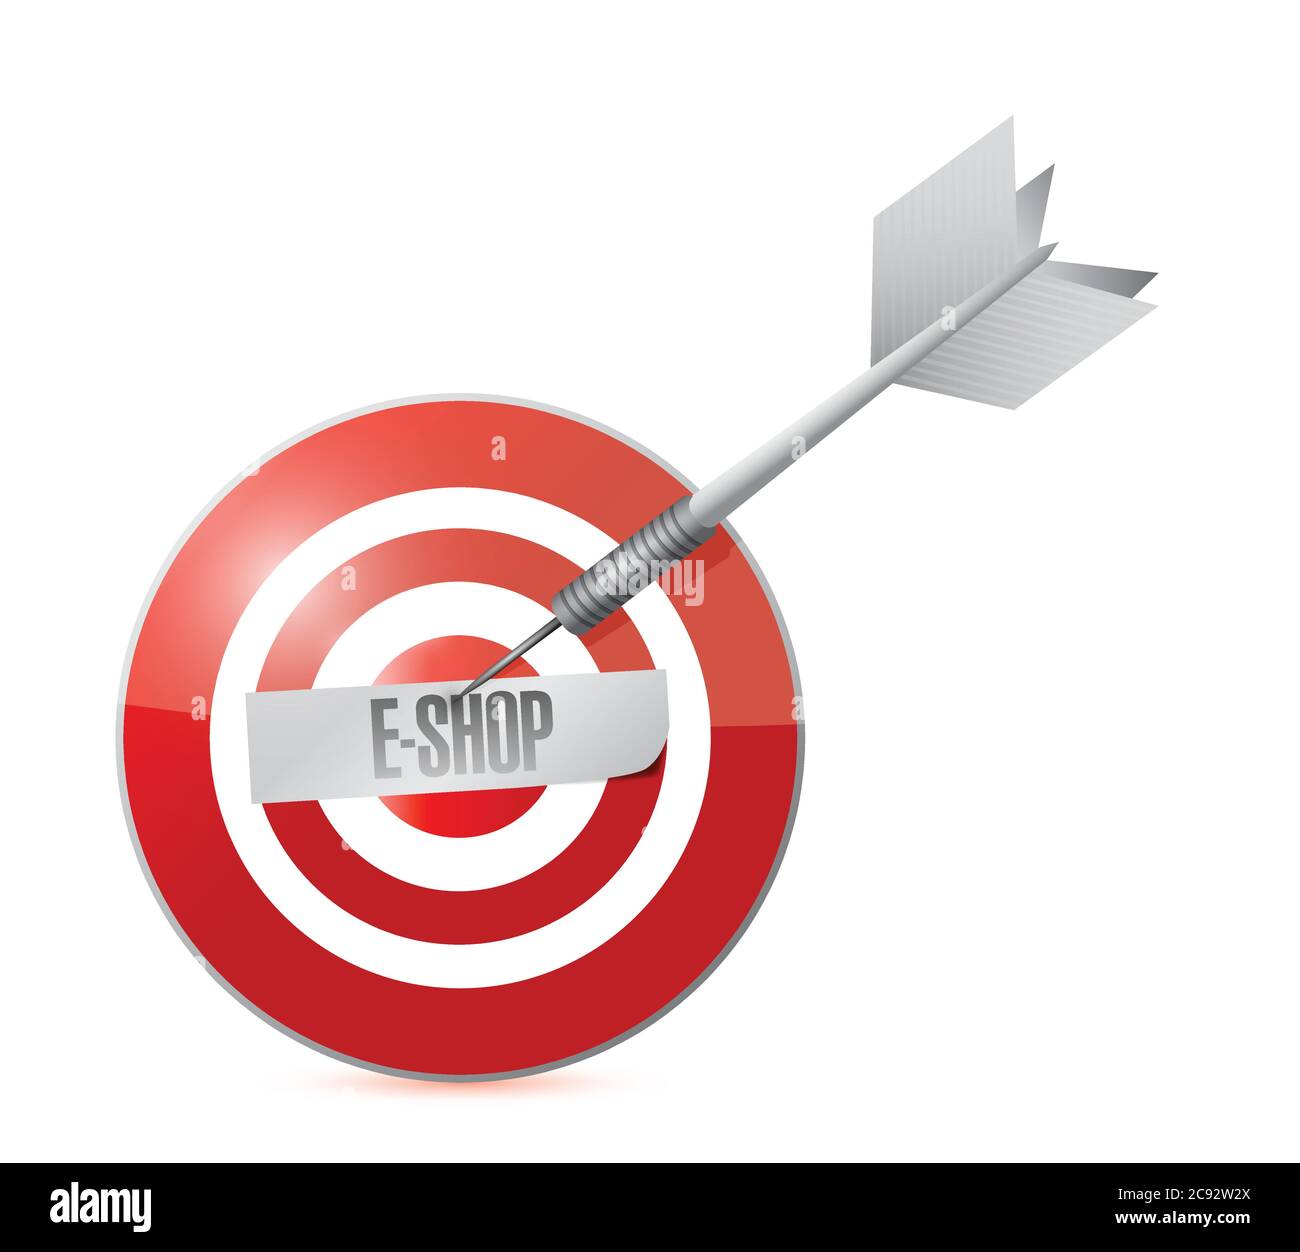 Eshop target power. illustration design over a white background Stock Vector